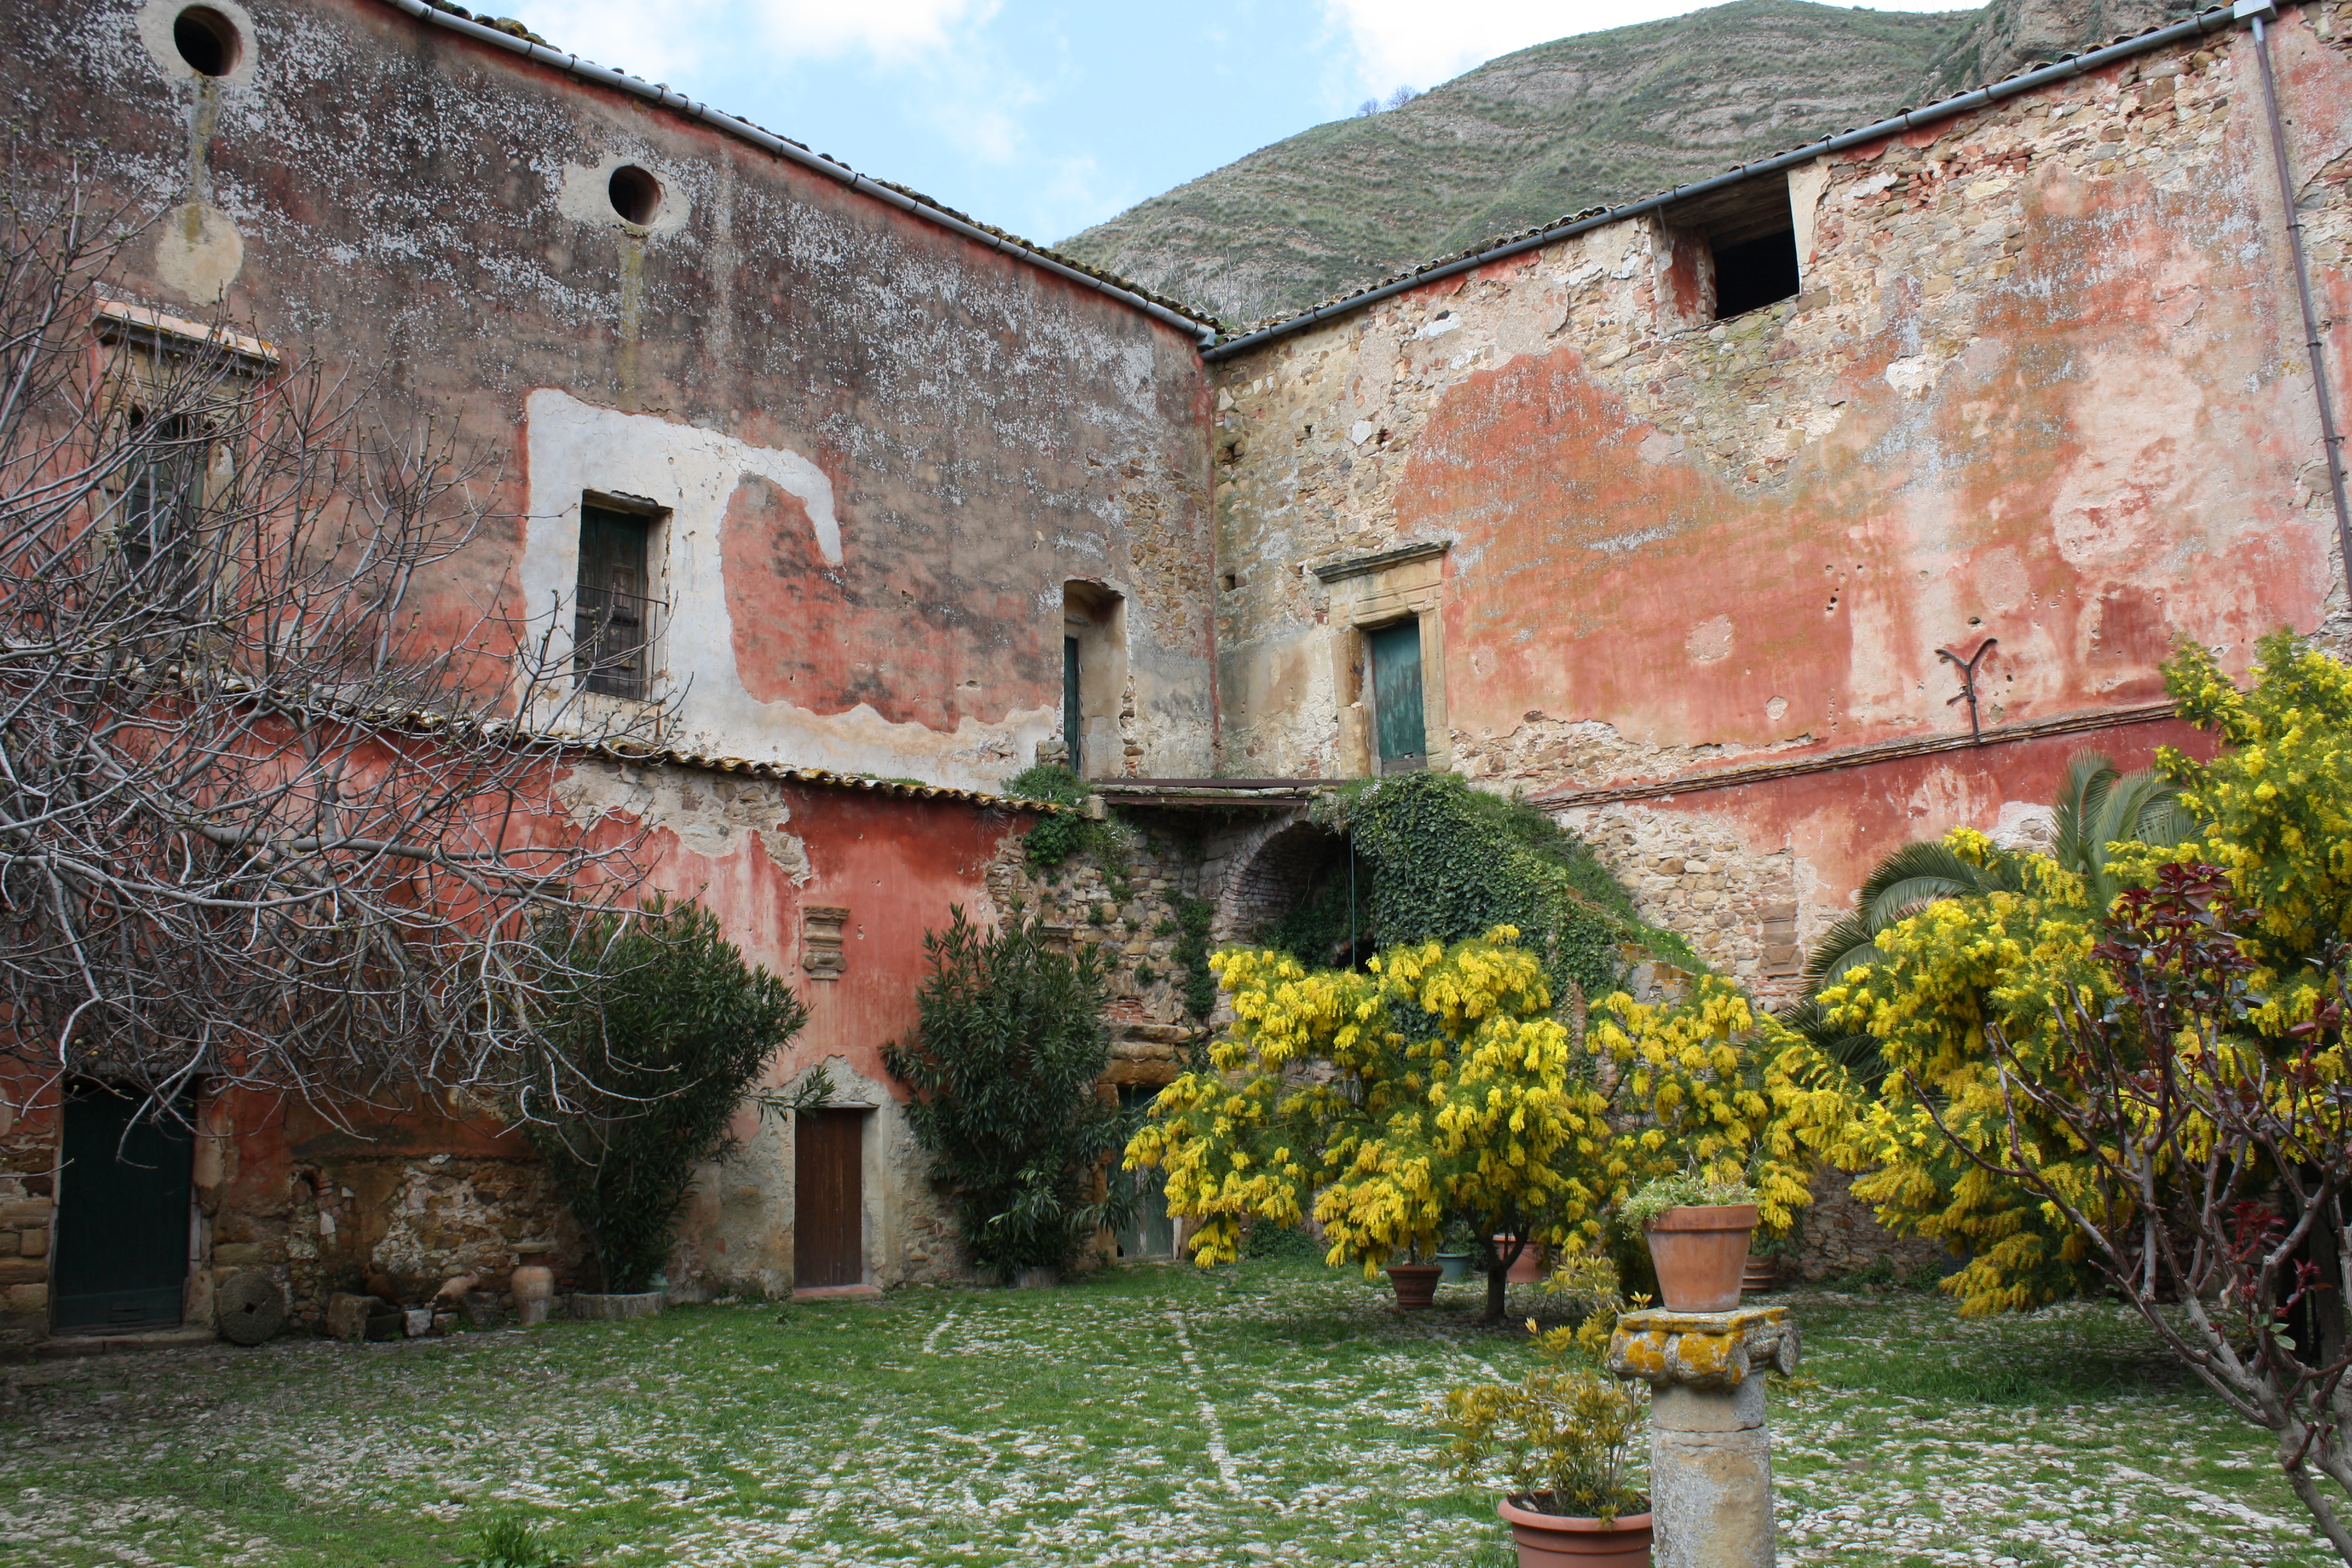 Walls inside Gangivecchio